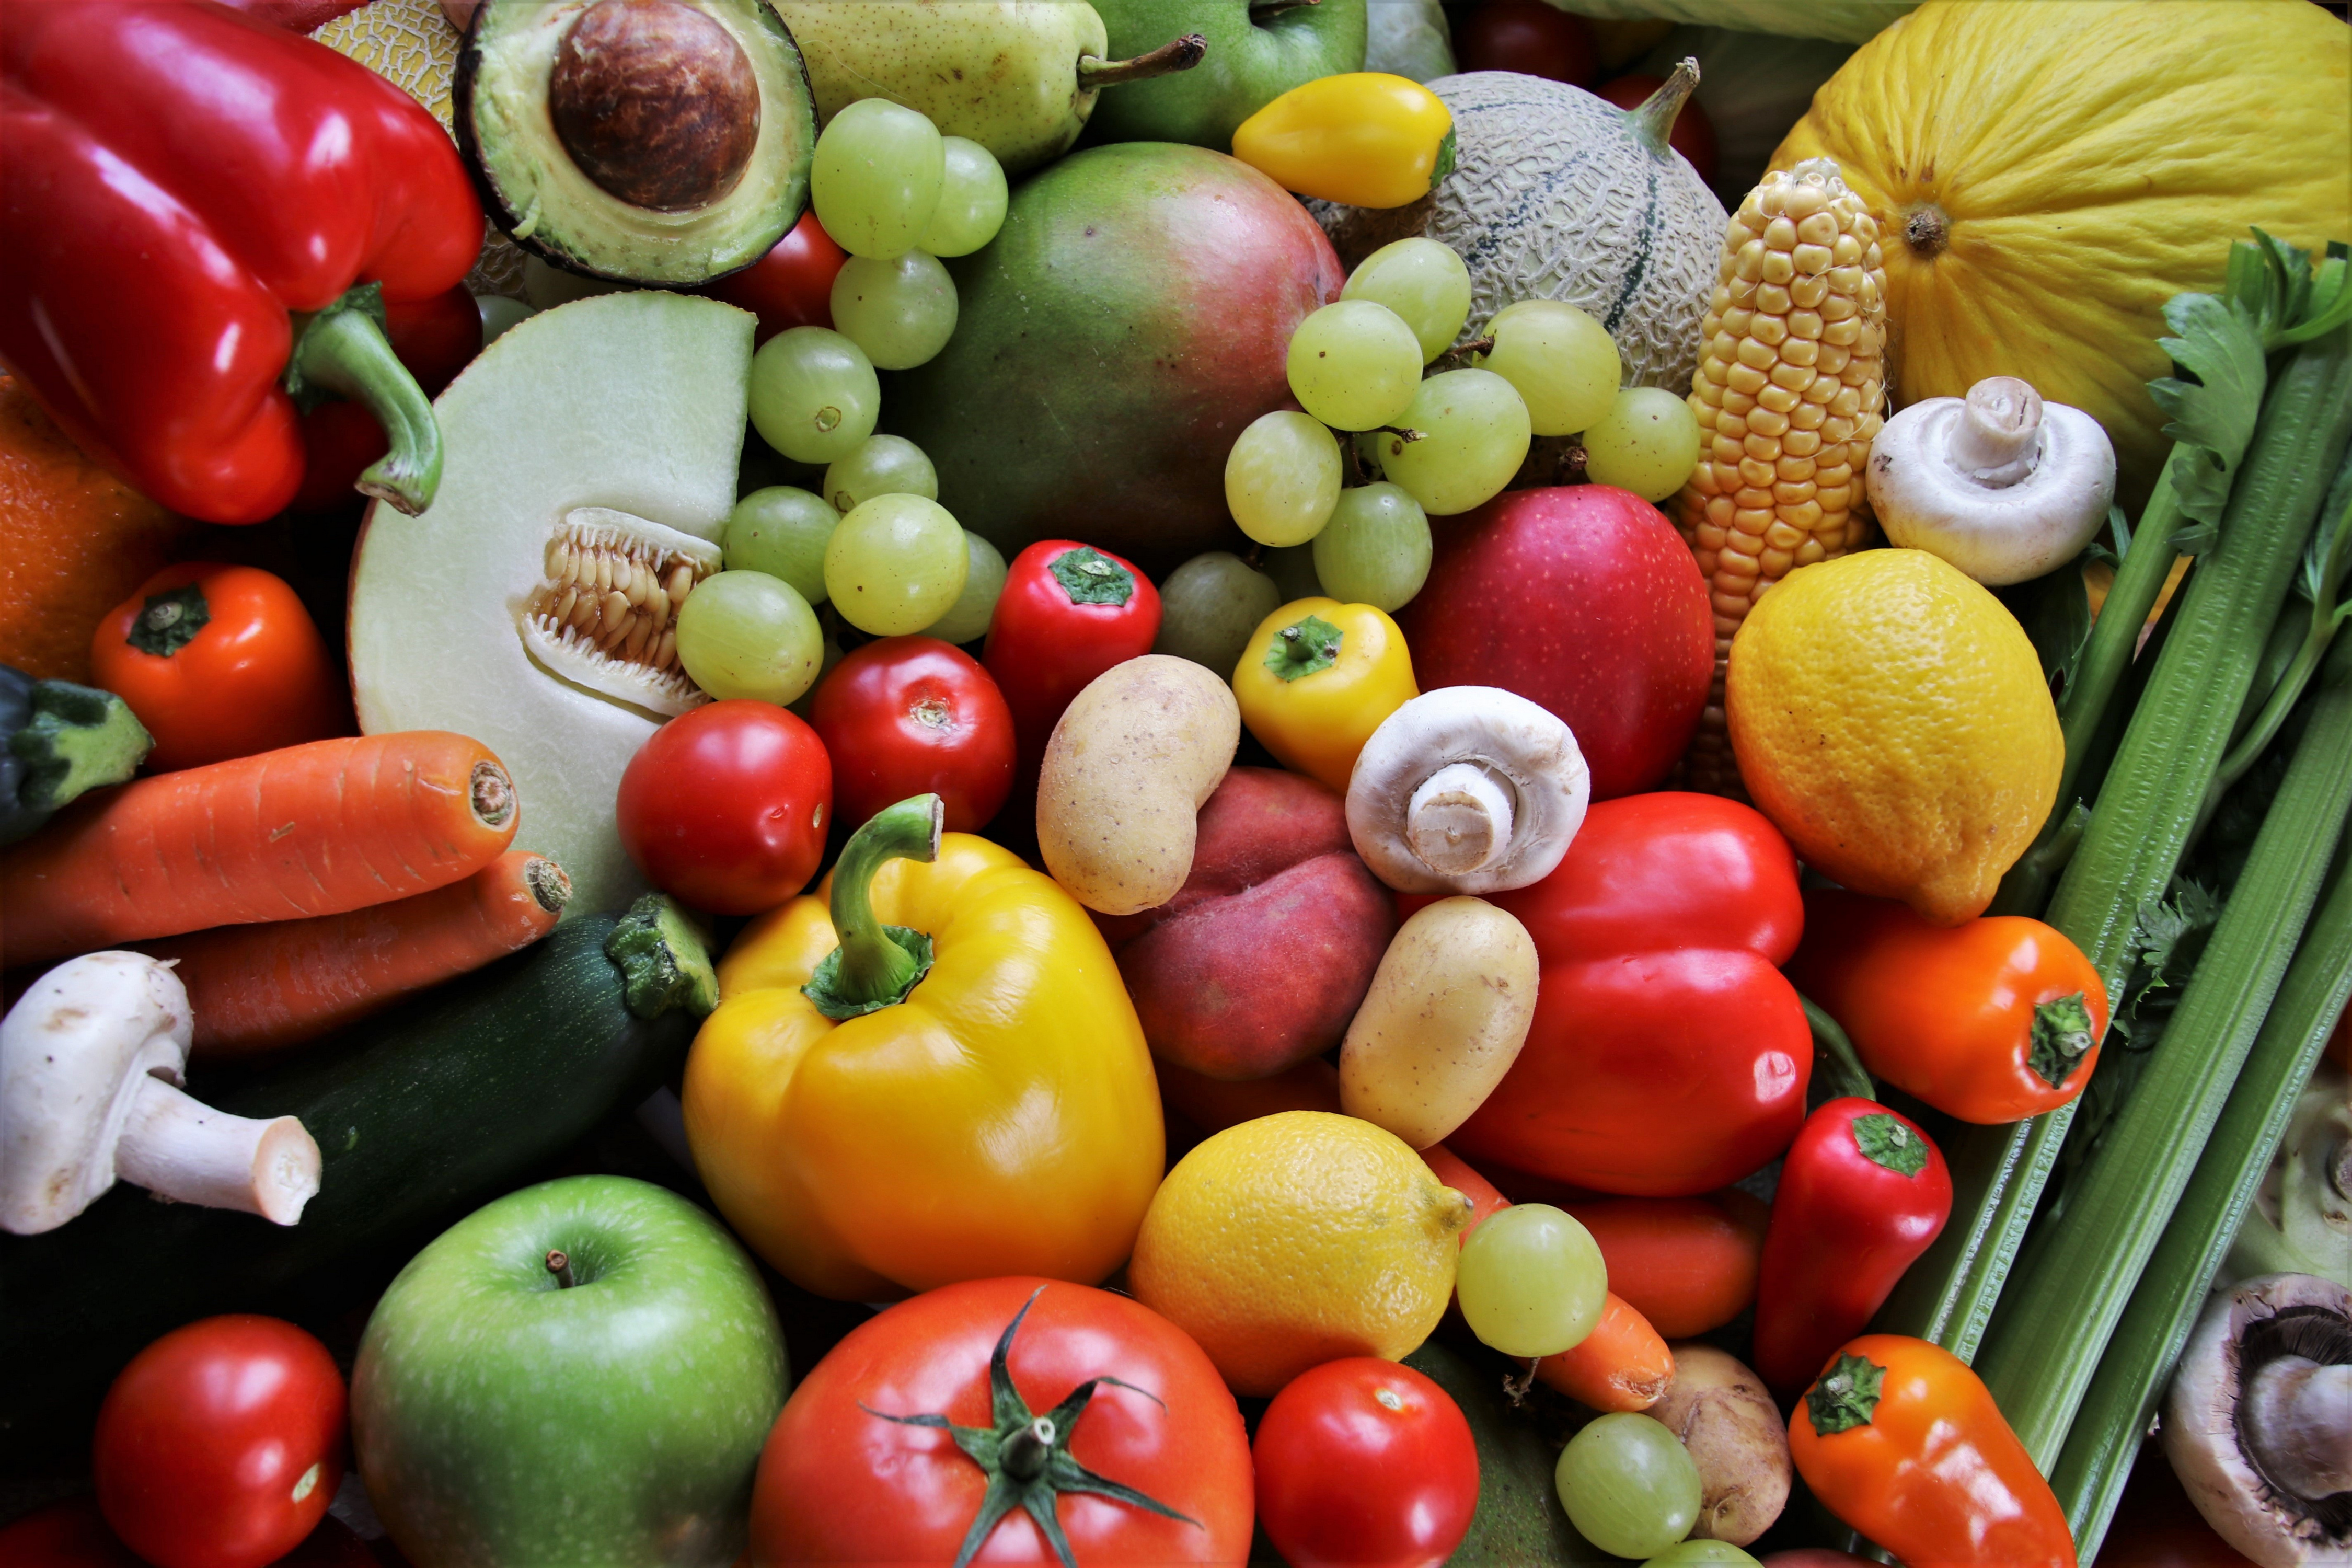 You like vegetables and fruits. Овощи и фрукты. Свежие овощи и фрукты. Arerns b jdjob. Красивые овощи.